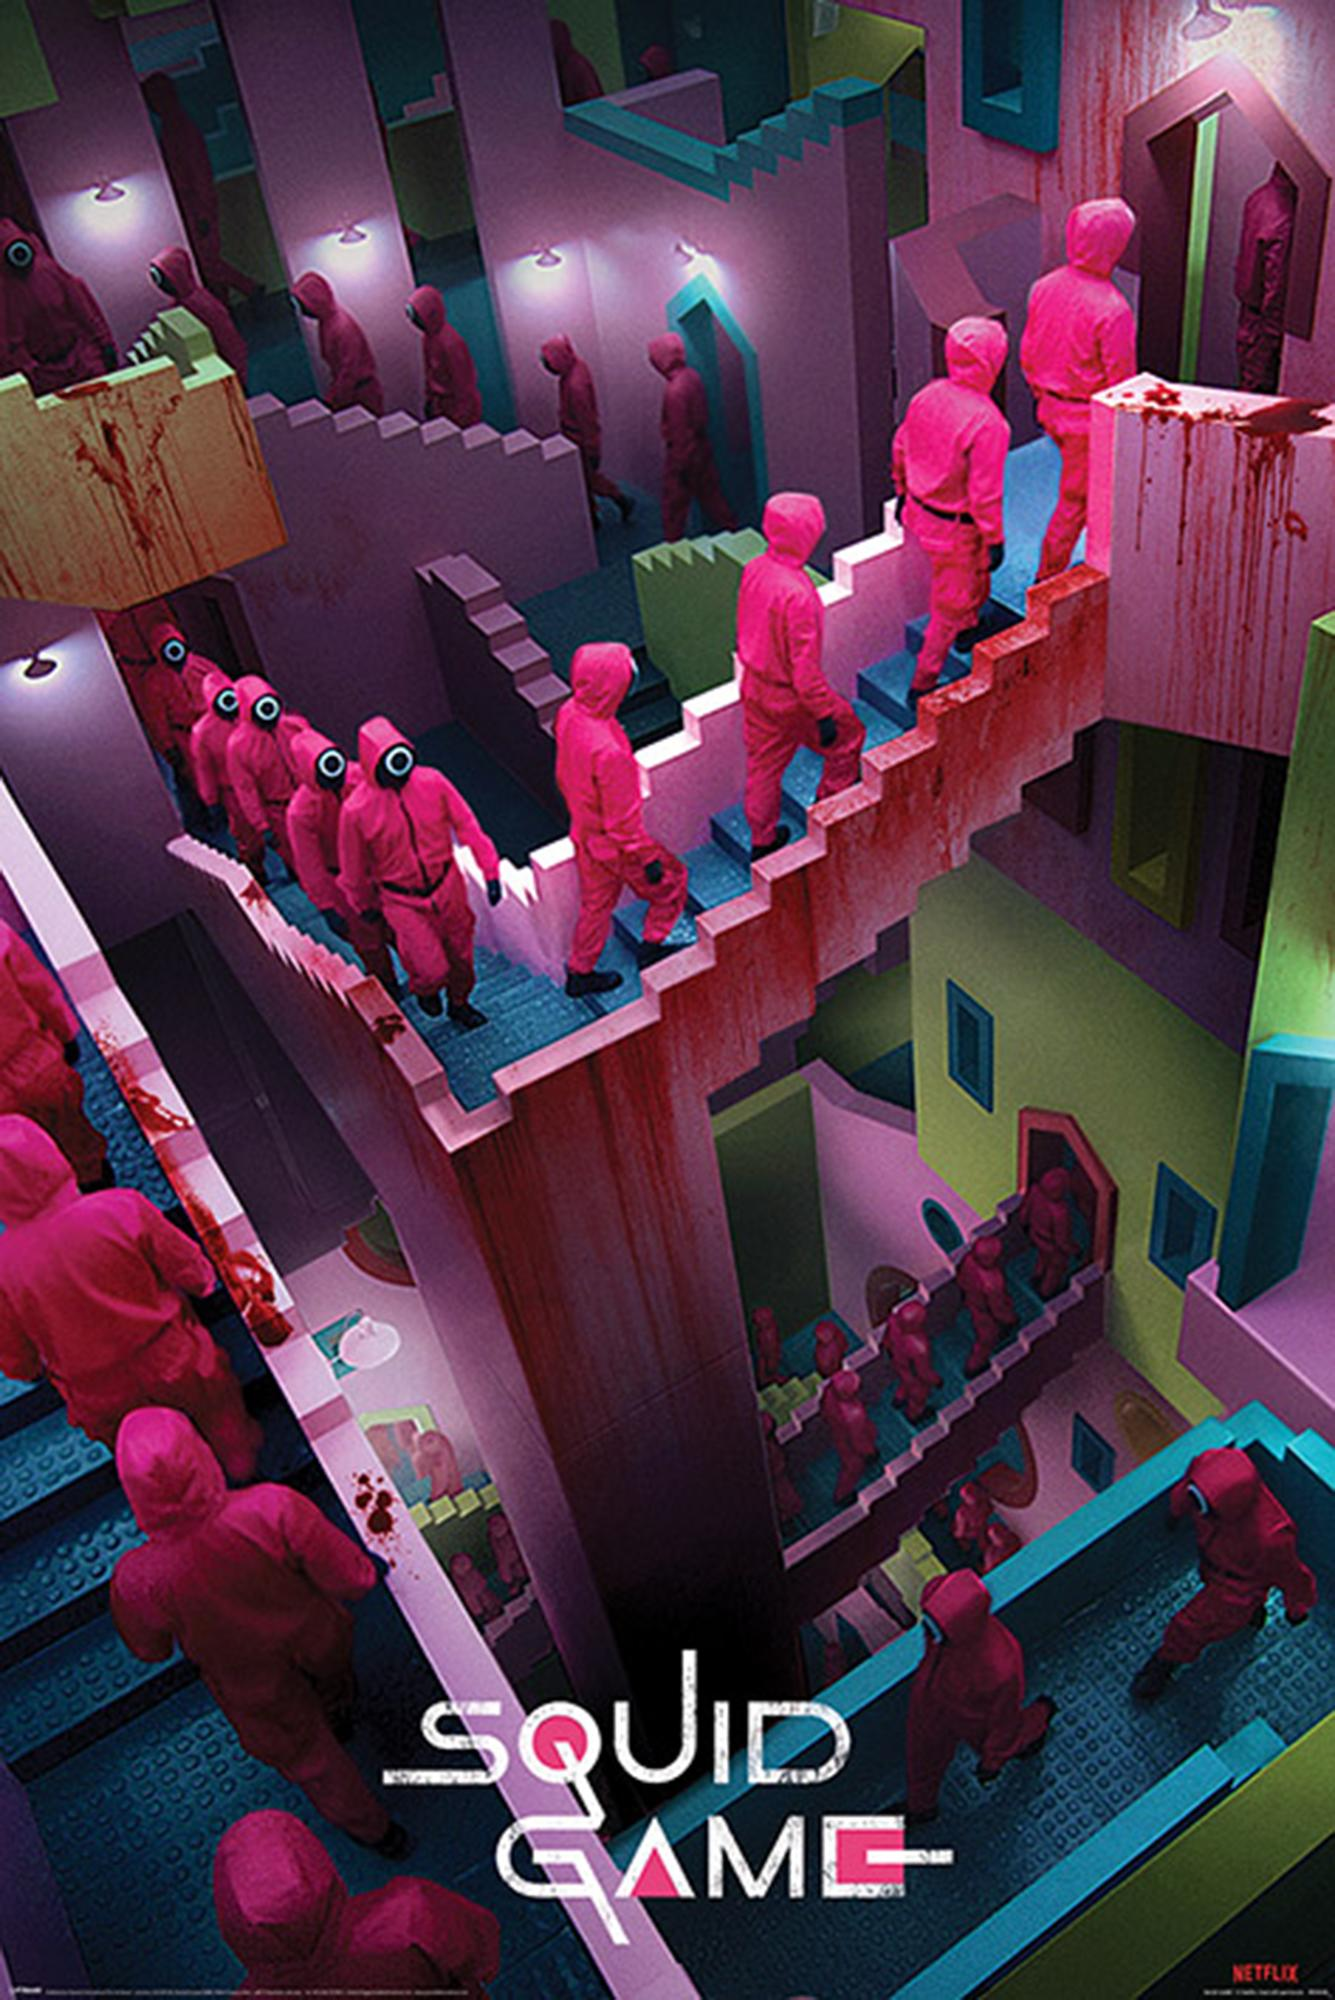 Netflix Poster Squid Stairs PYRAMID Crazy Poster Game Großformatige INTERNATIONAL